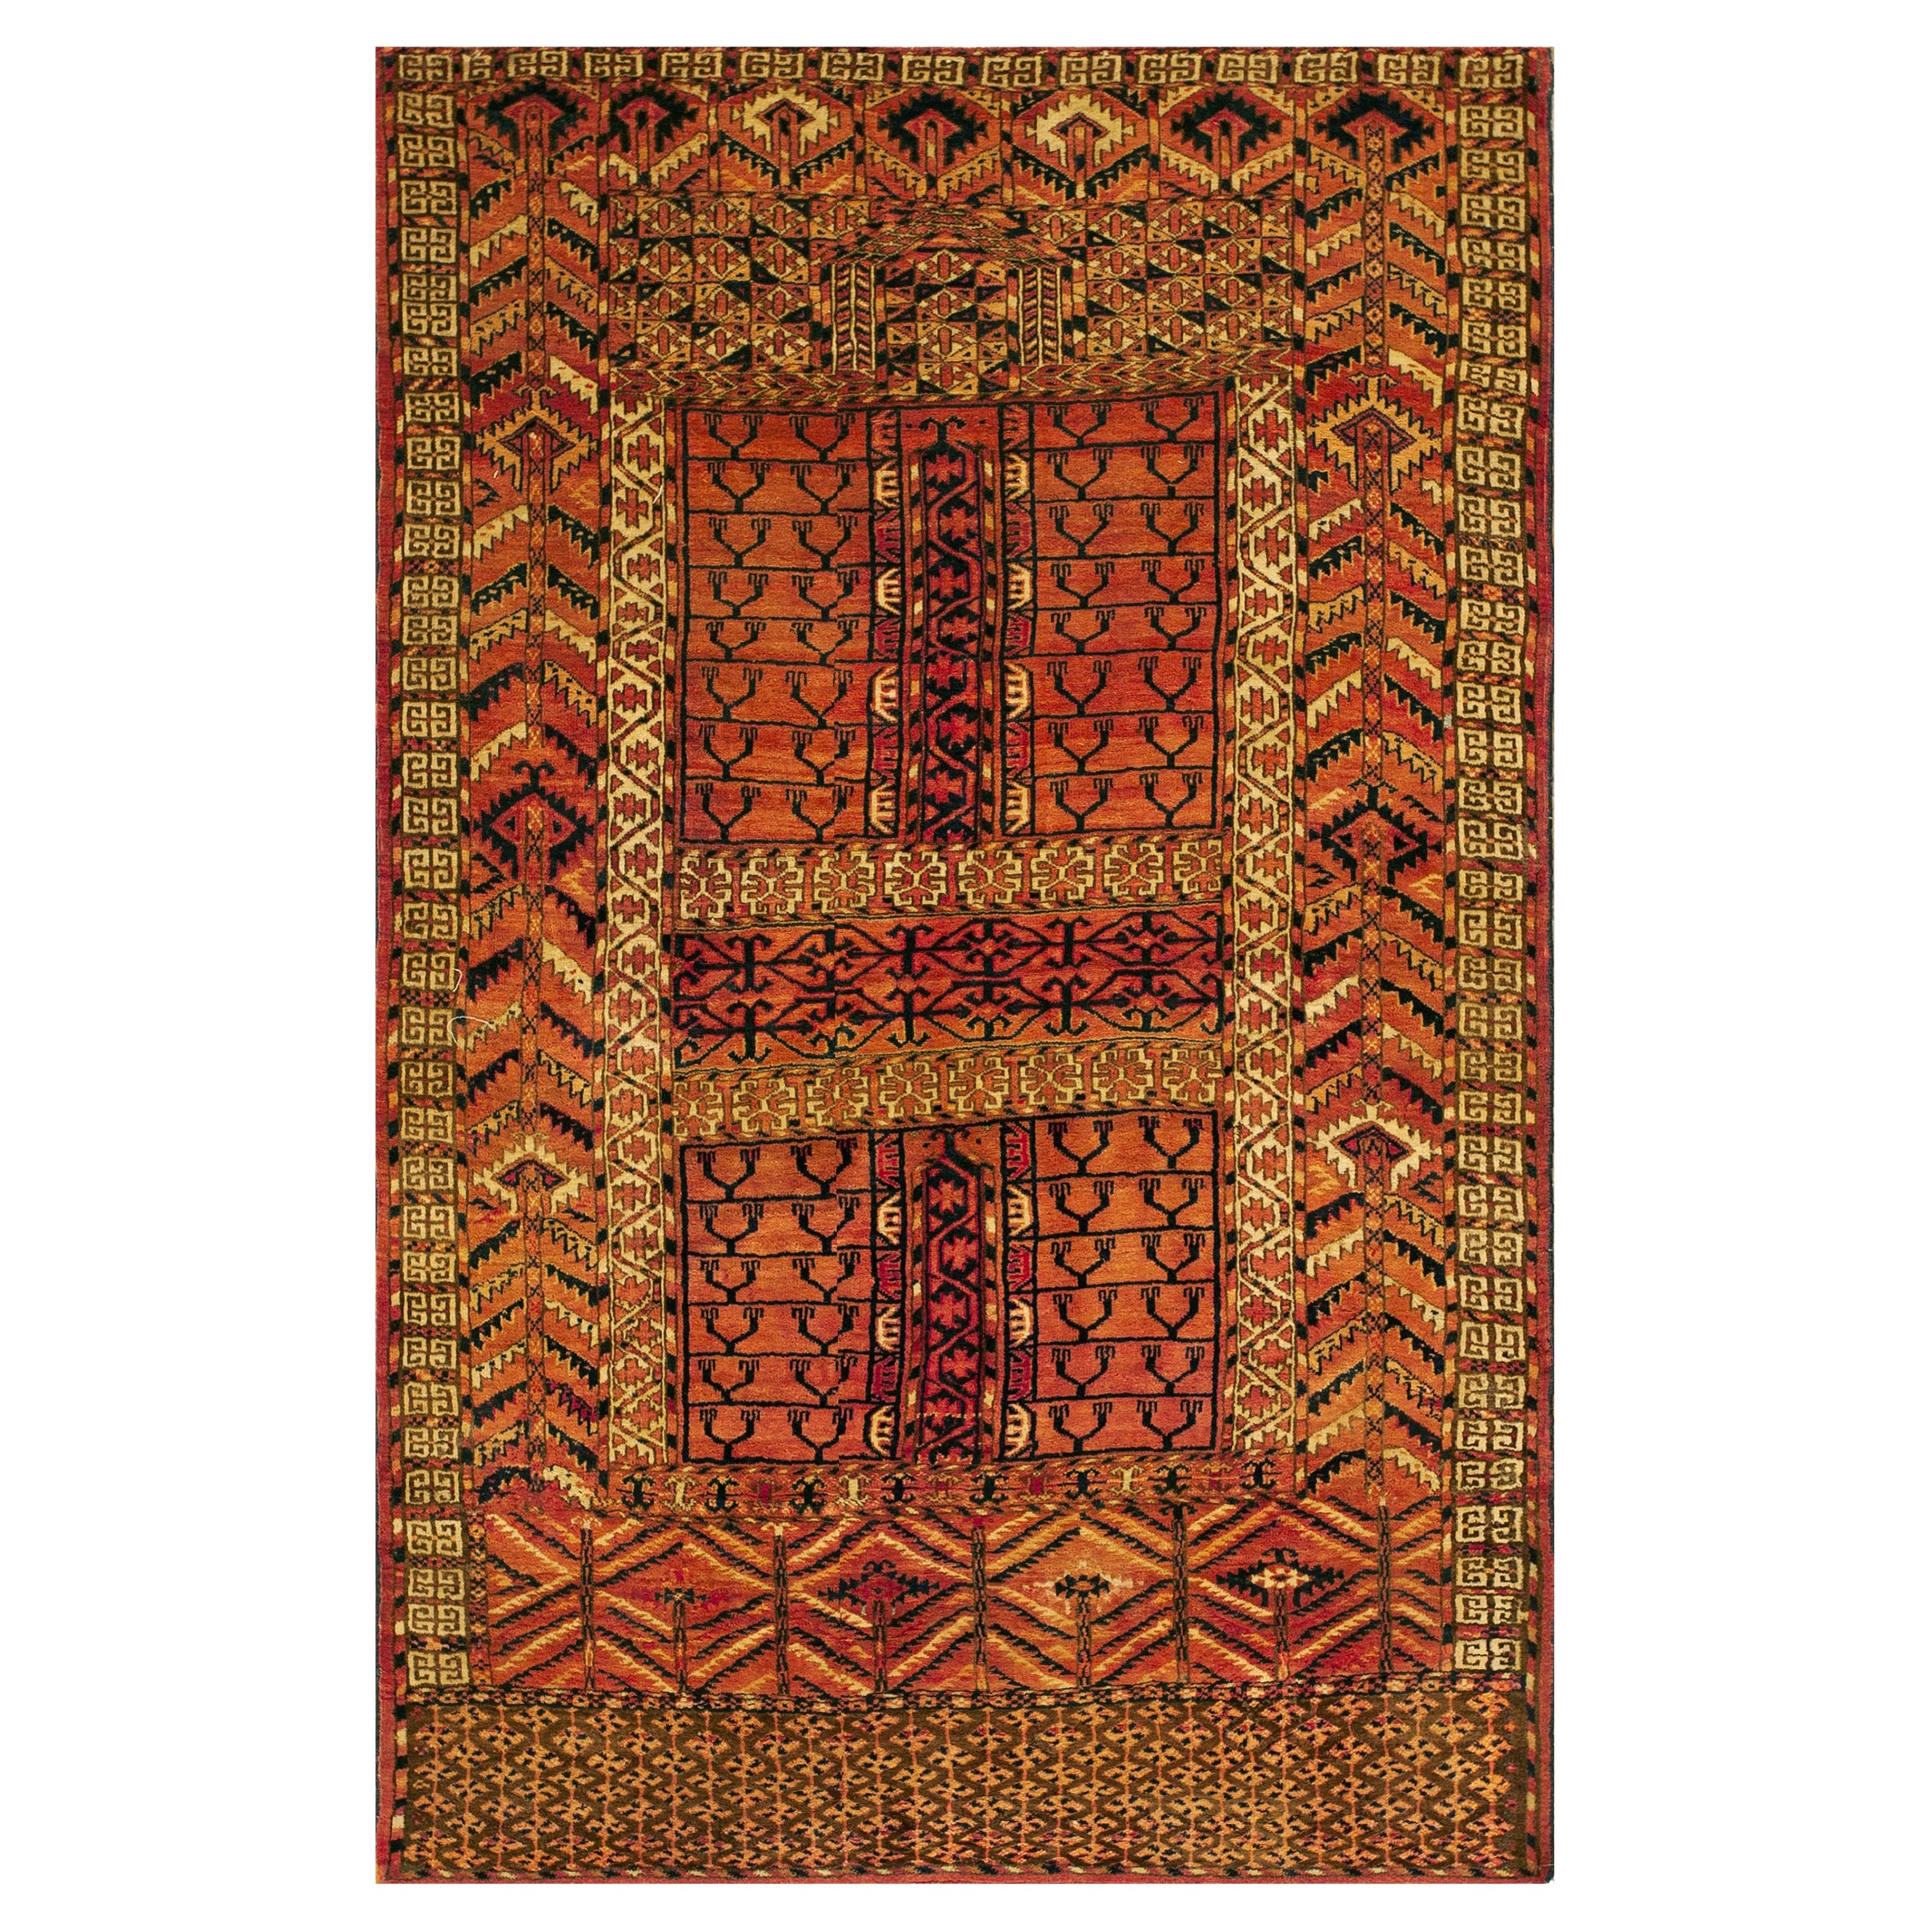 Late 19th Russian Turkmen Engsi Carpet ( 3' 9" x 5' 5" - 114 x 165 cm)